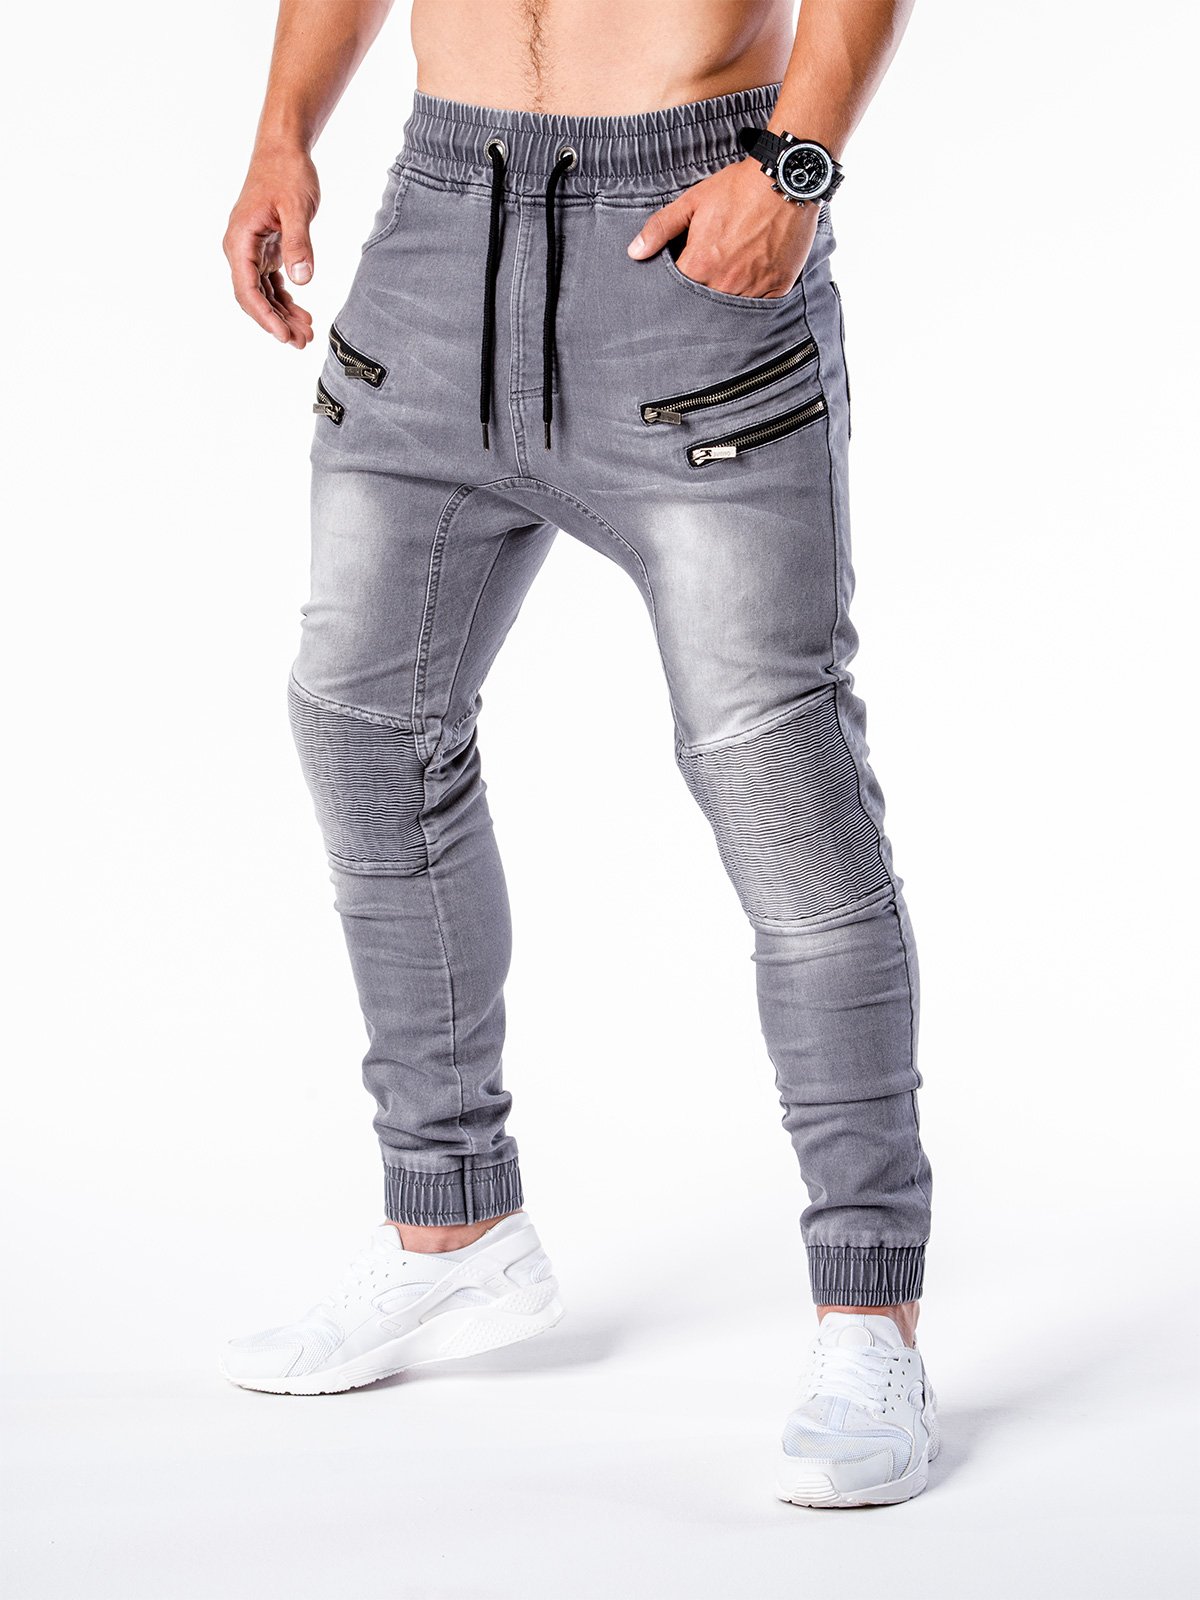 Men's jeans joggers P405 - grey | MODONE wholesale - Clothing For Men